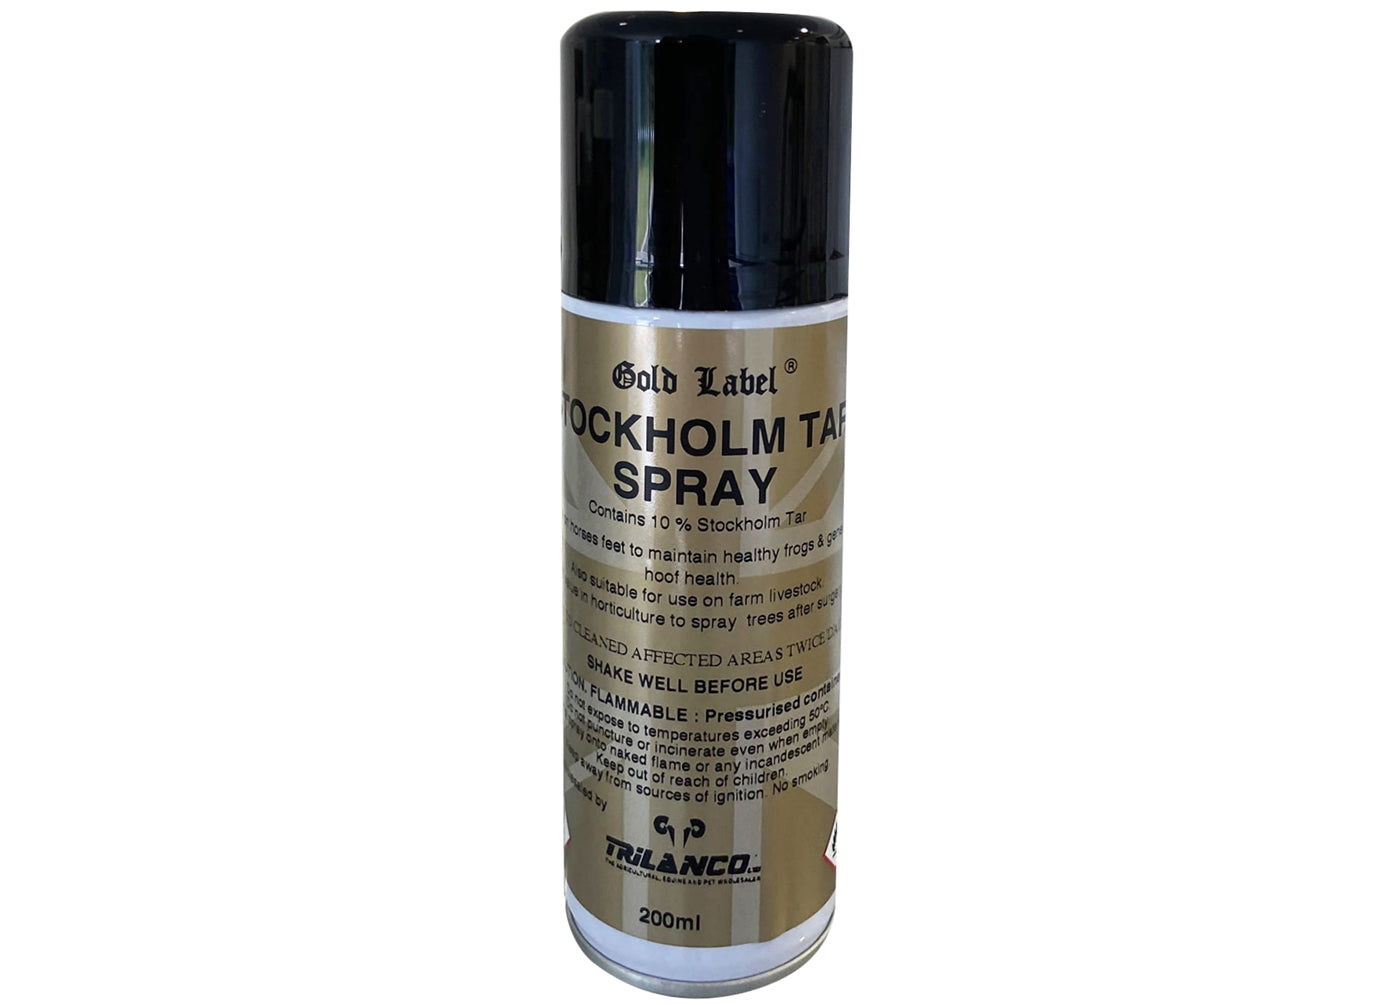 Gold Label - Stockholm Tar Spray 200ml - Buy Online SPR Centre UK